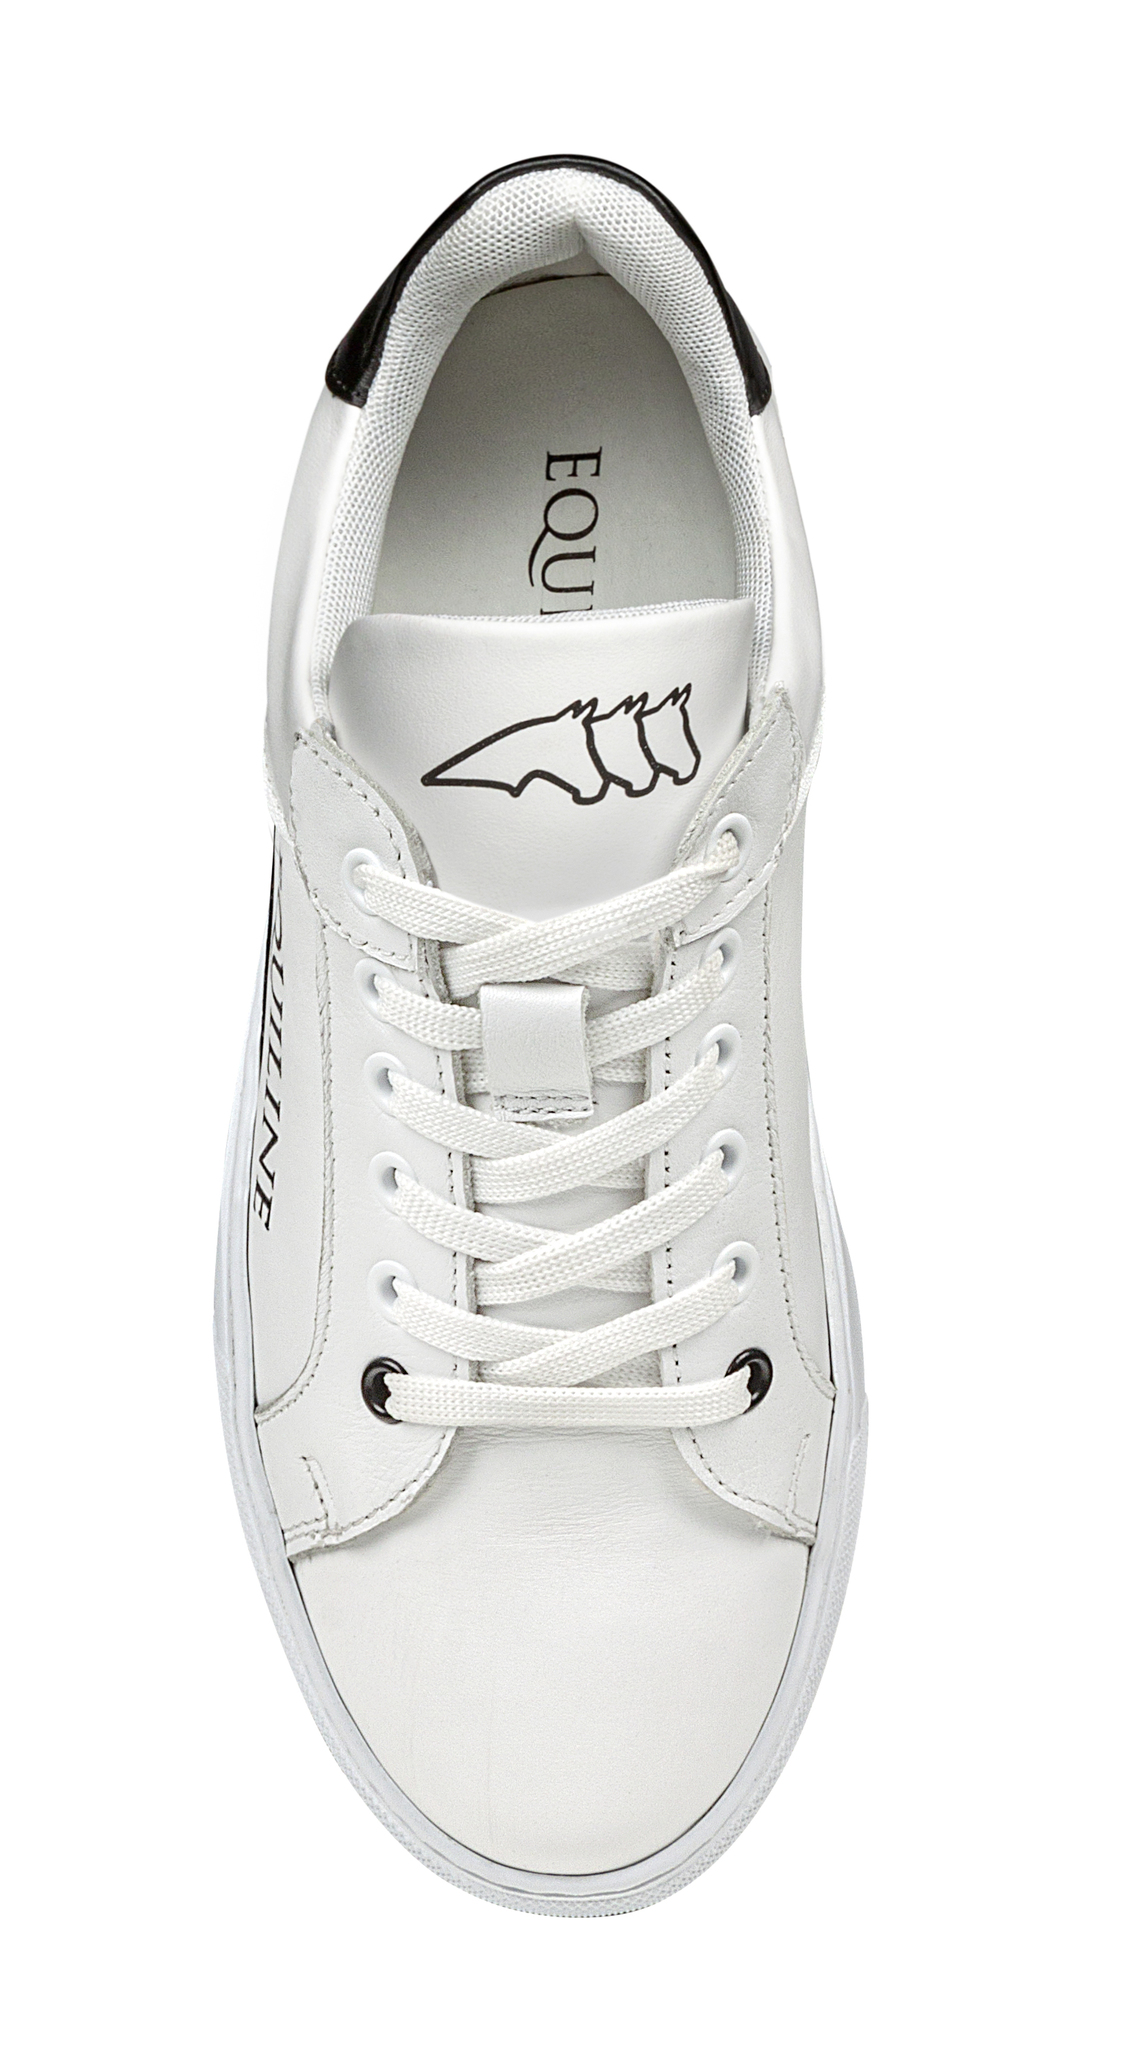 Coola vita sneakers från Equiline